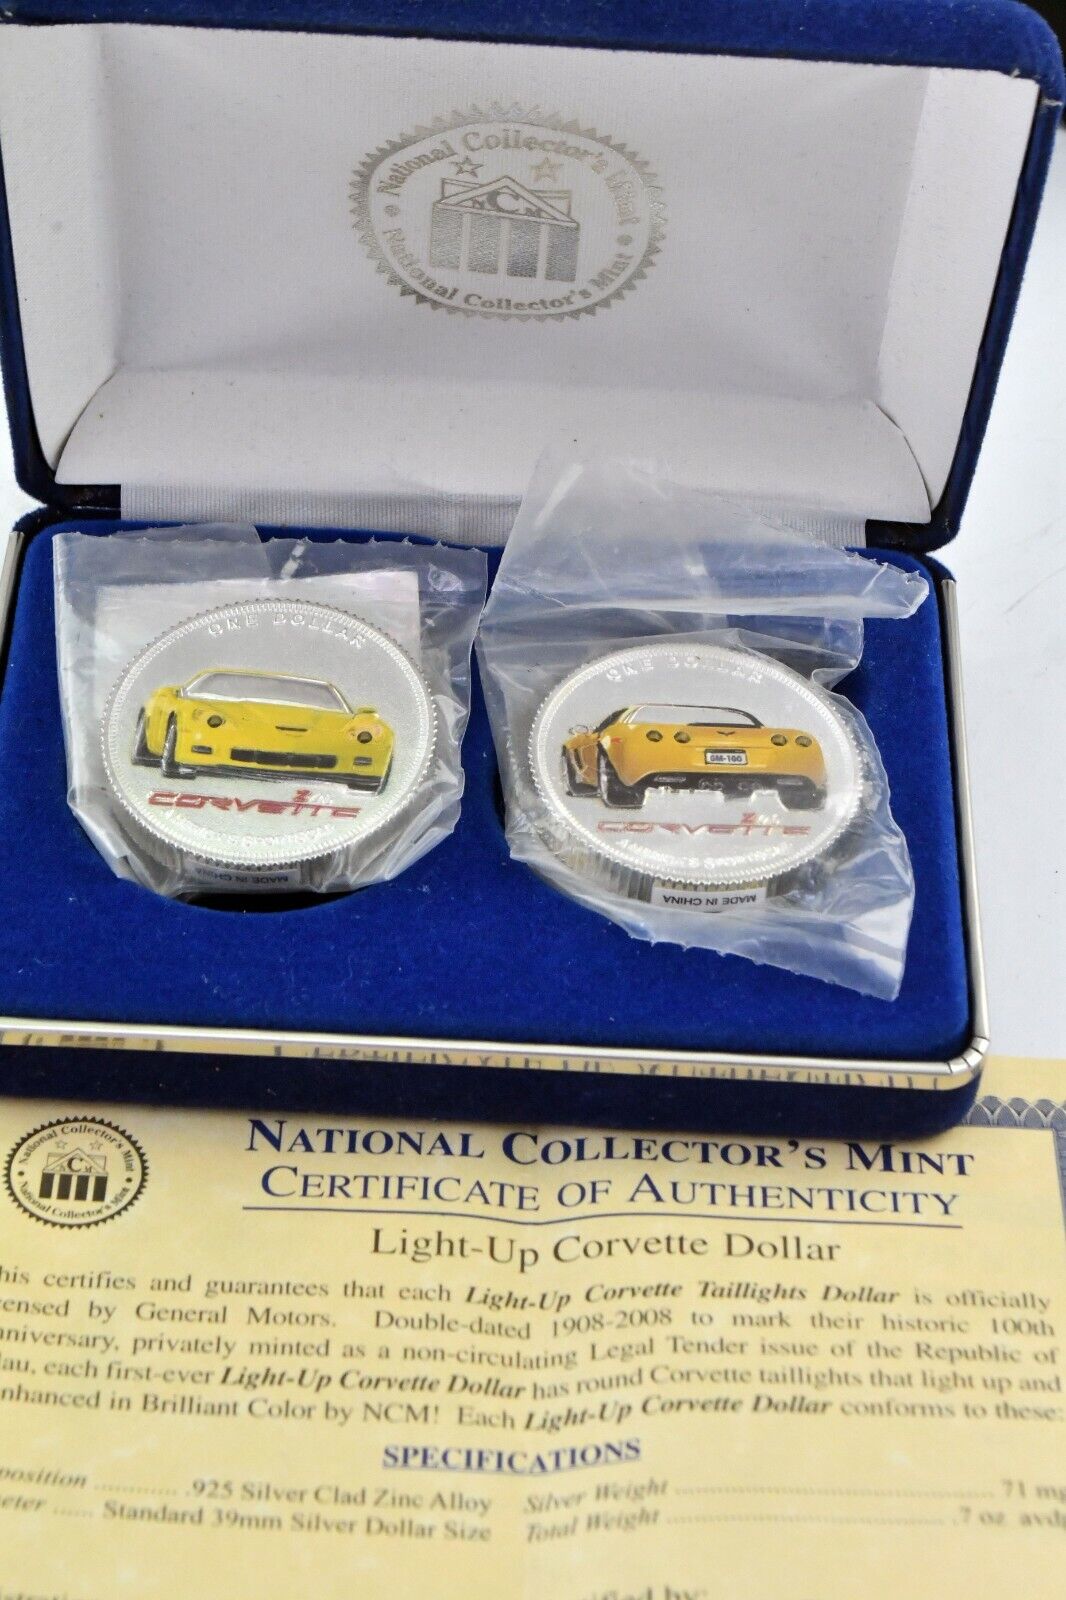 100th Anniversary National Collectors Mint Light Up Corvette Republic of Palau